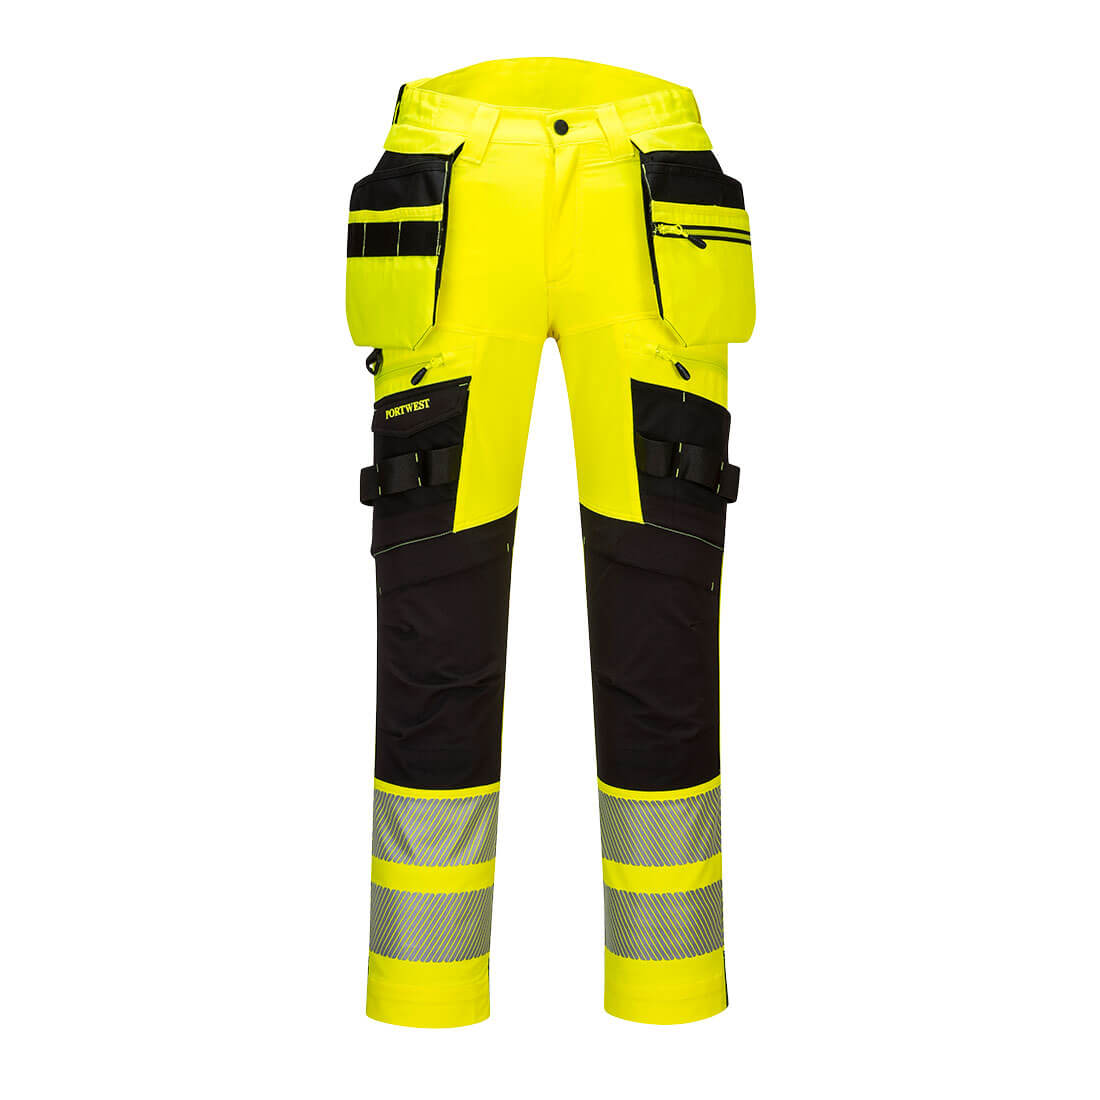 Portwest Danube Trouser Pants Knee Pad Pockets Abrasion Resistant TX61